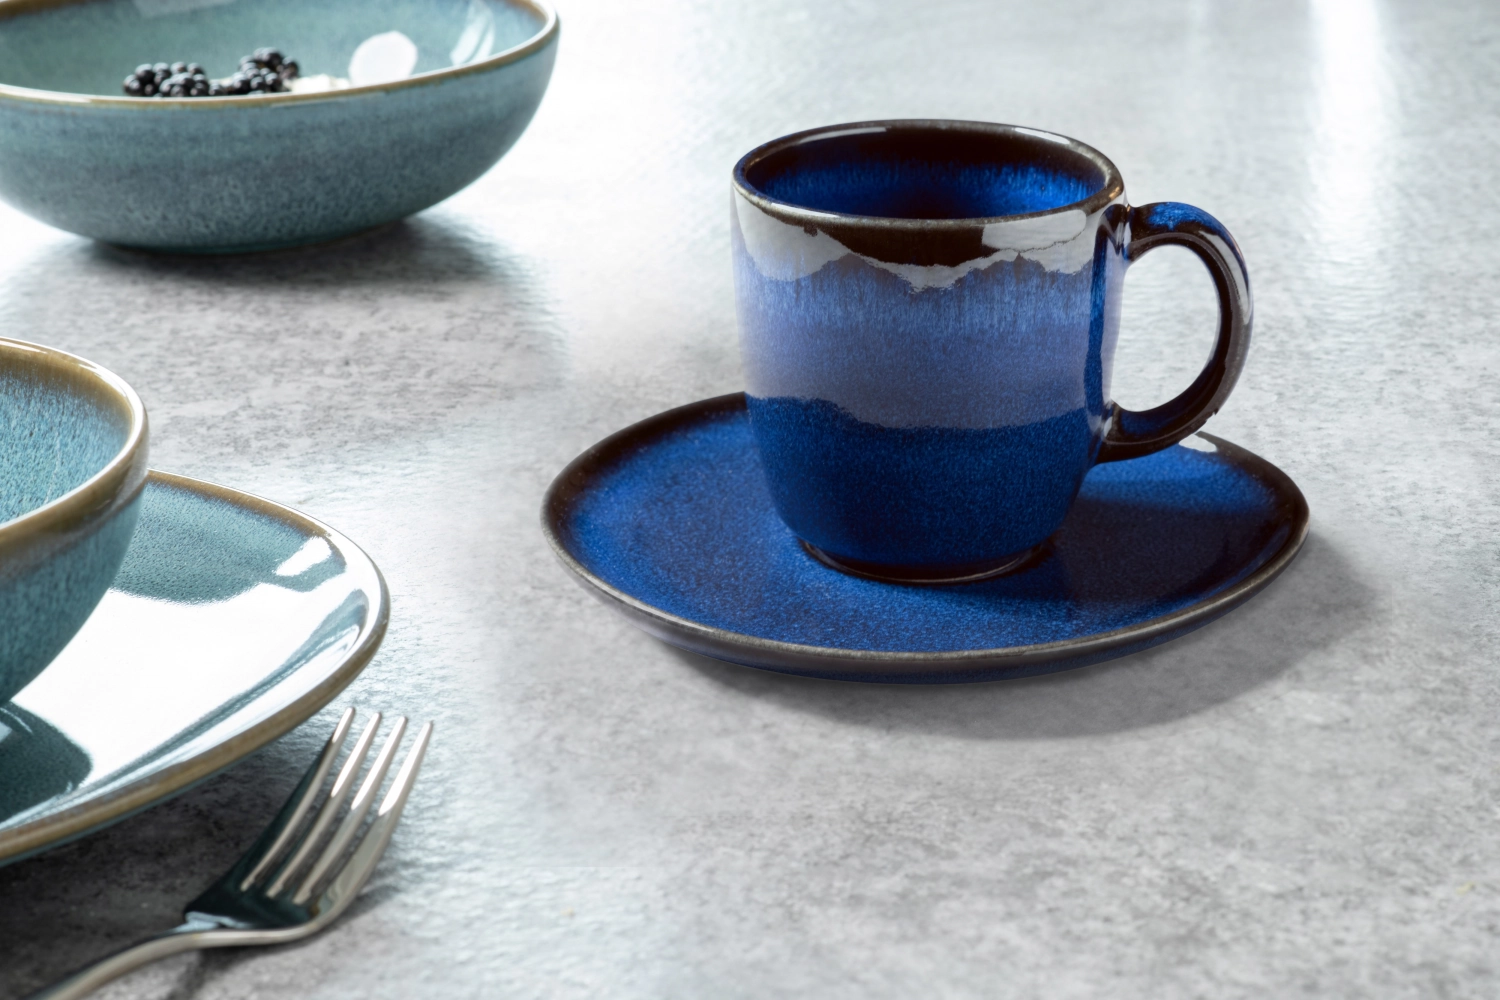 Lave bleu Kaffeeobertasse 10.6x7.7x8.1cm 0.24lt